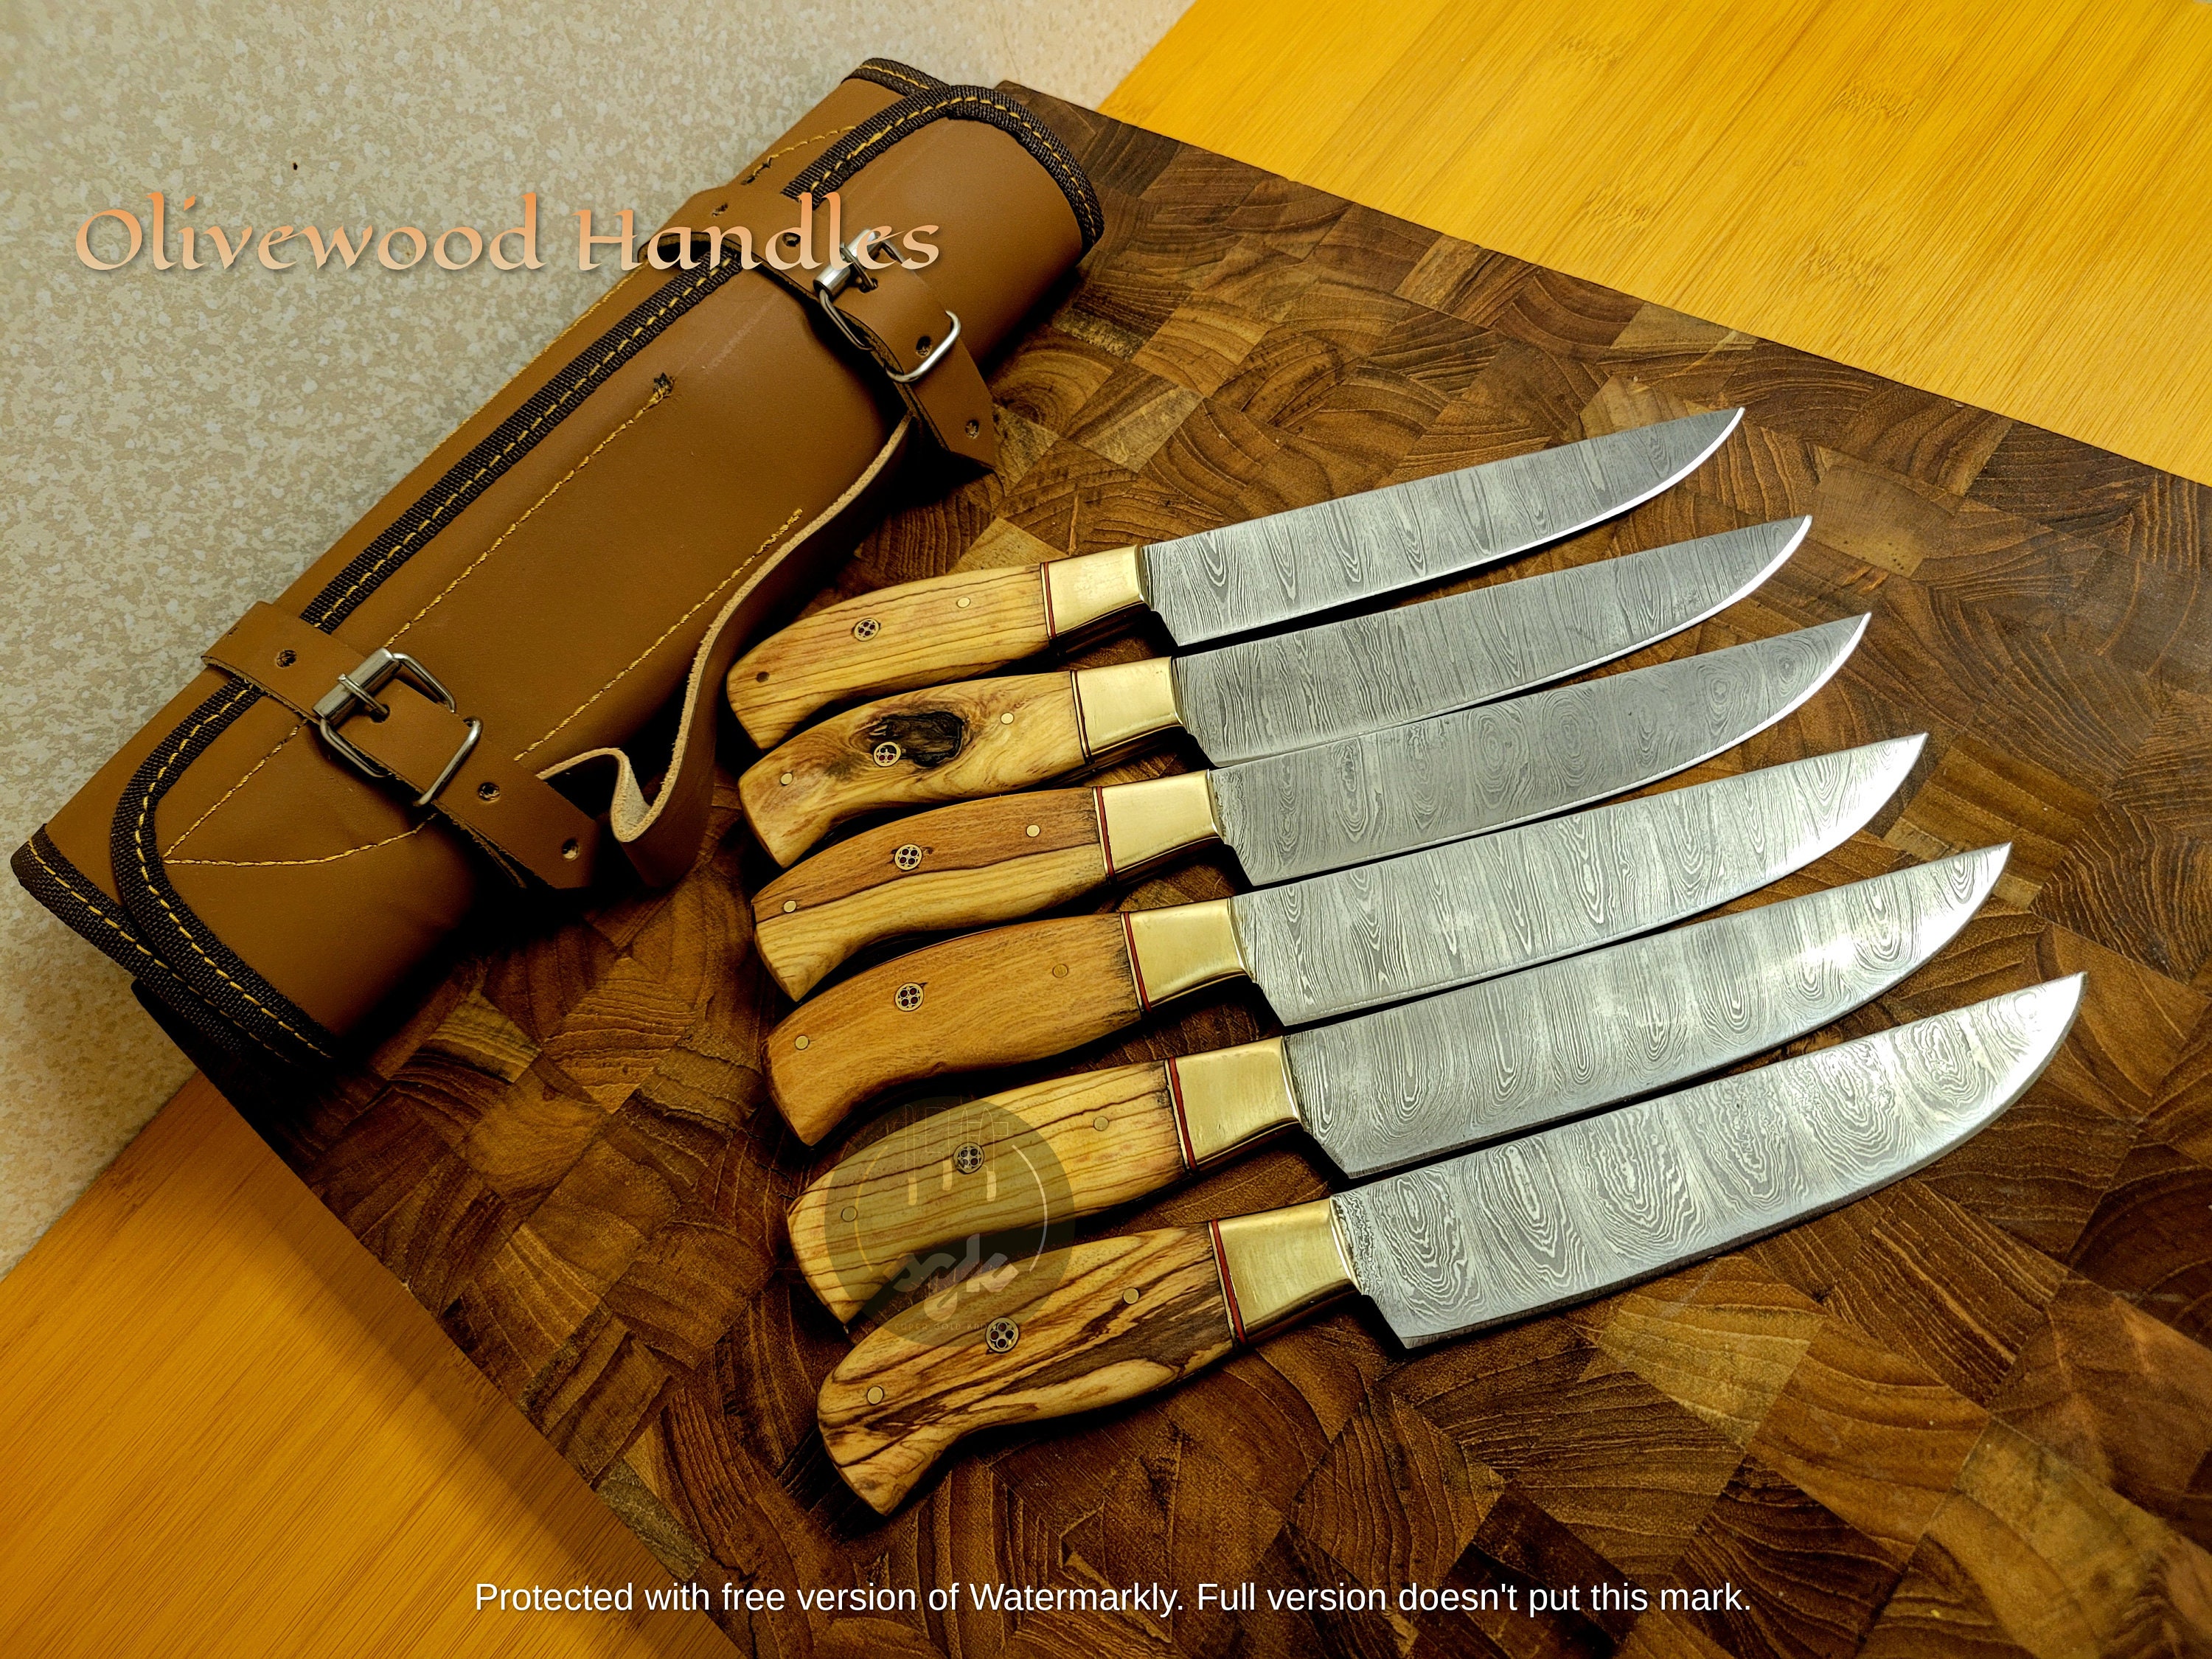 Steak Knife Set With Sharp Serrated Blade,Natural Wooden  Handle,Professional Steak Knife Set.